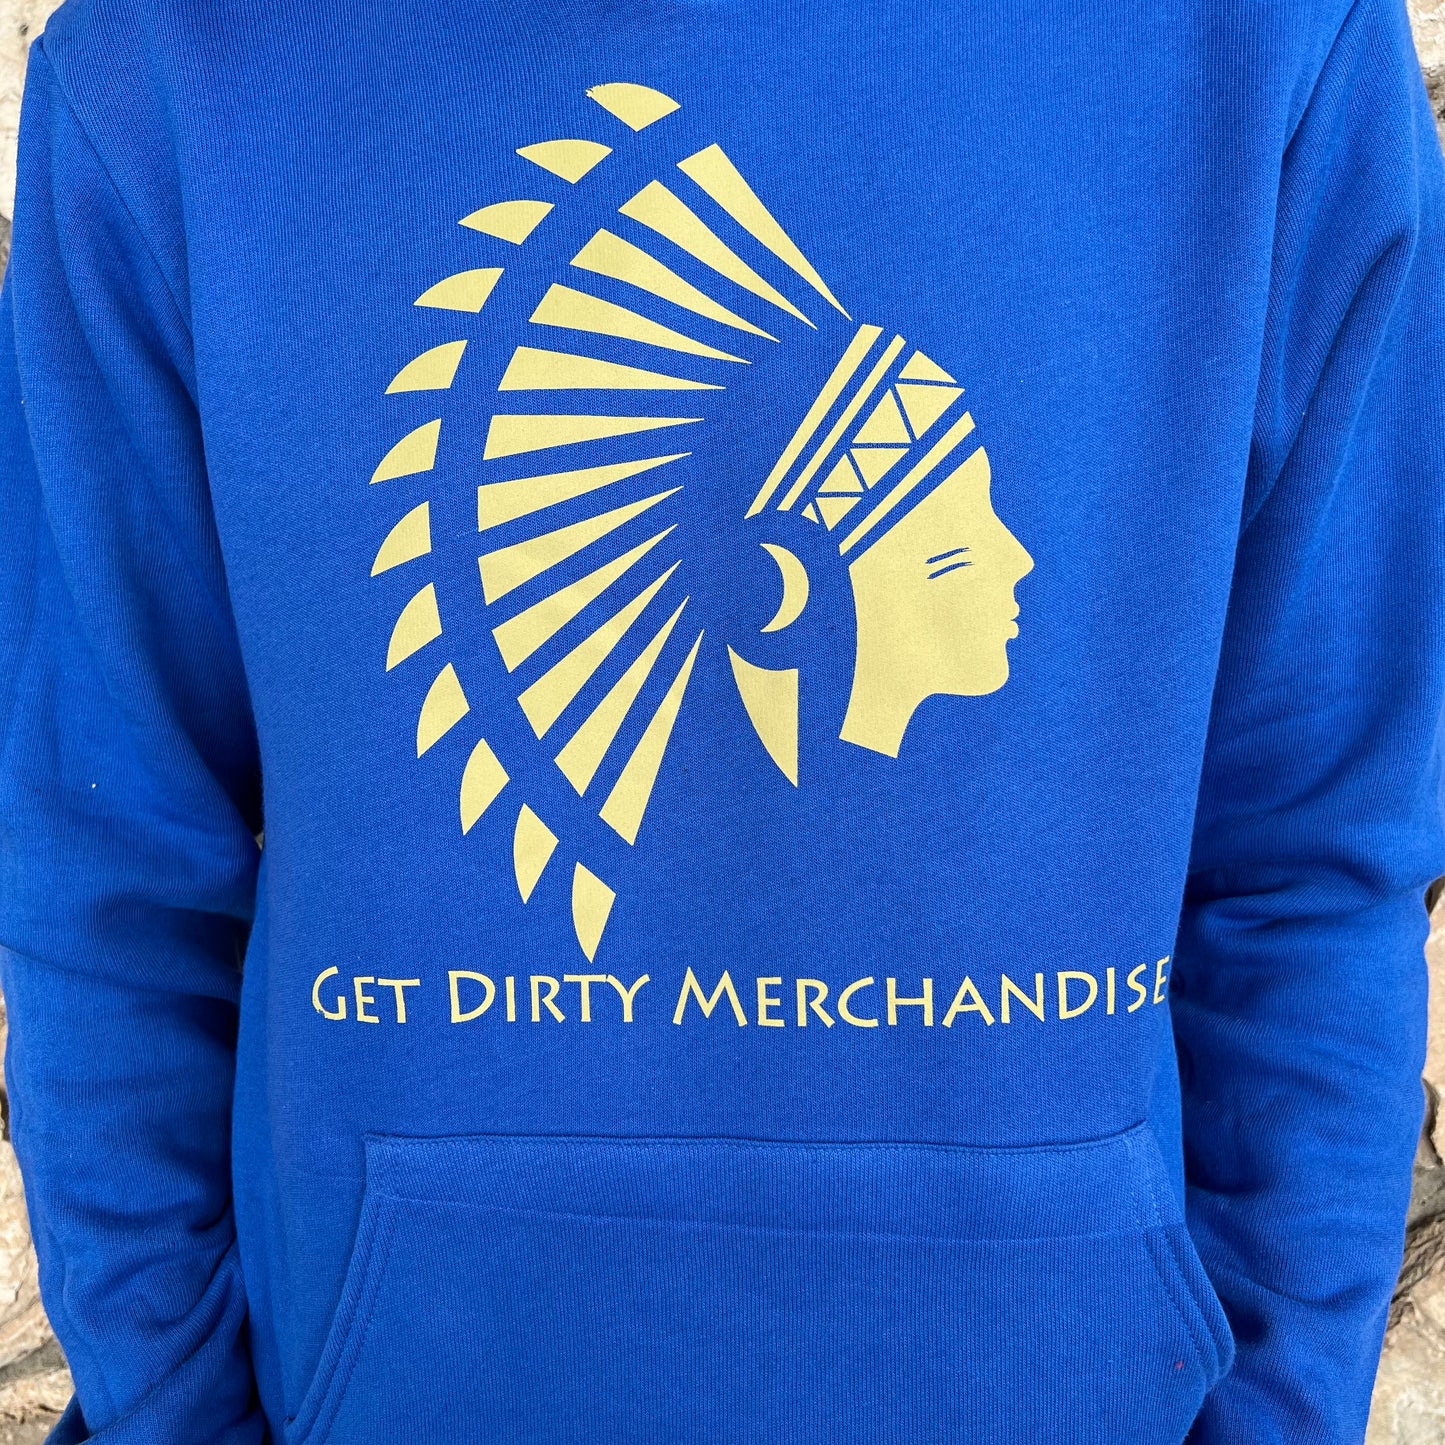 Get Dirty Merchandise Lucy sudadera con capucha azul real/dorada